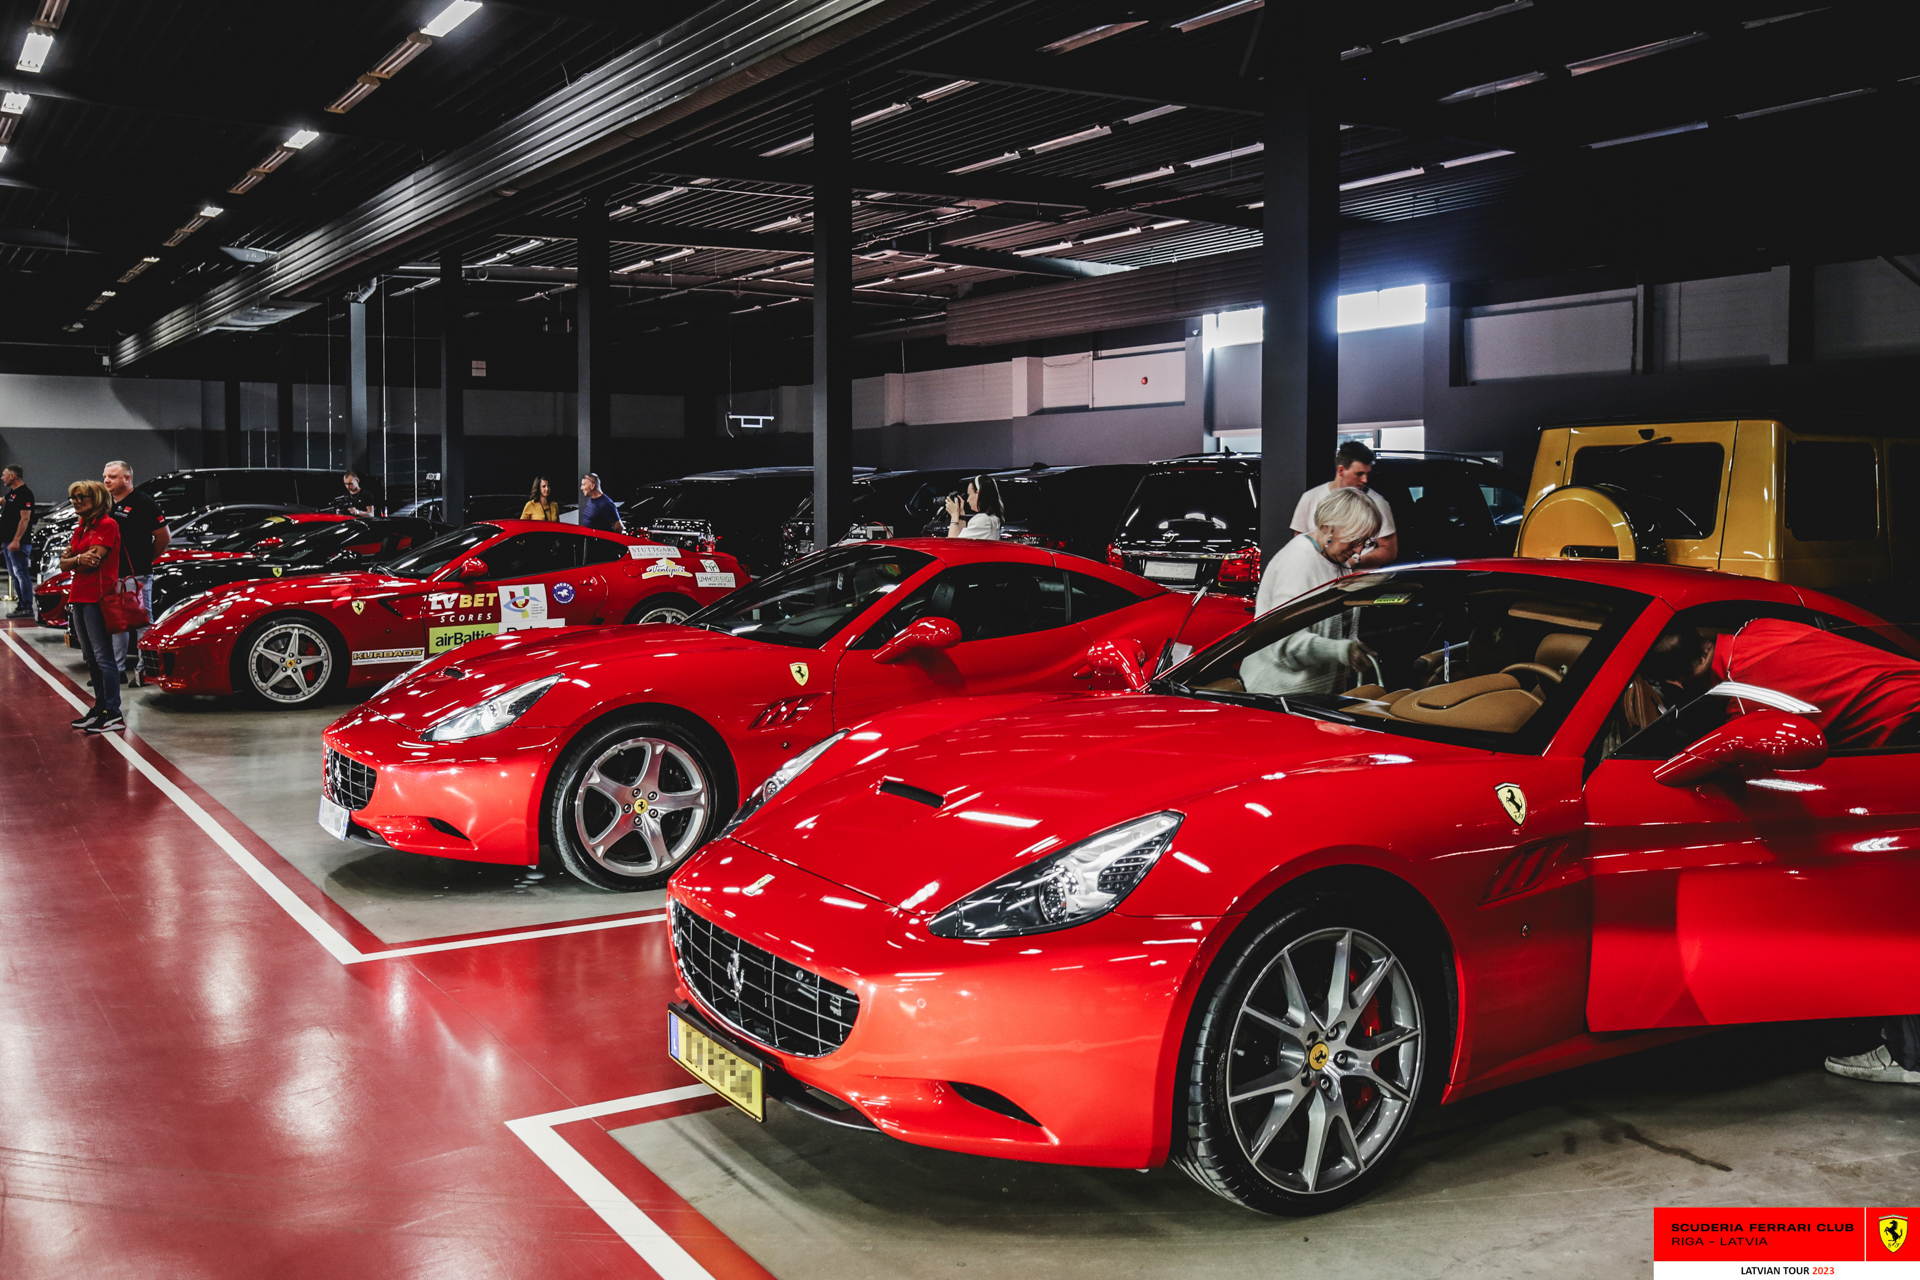 Ferraris in Stuttgart’s garage. 